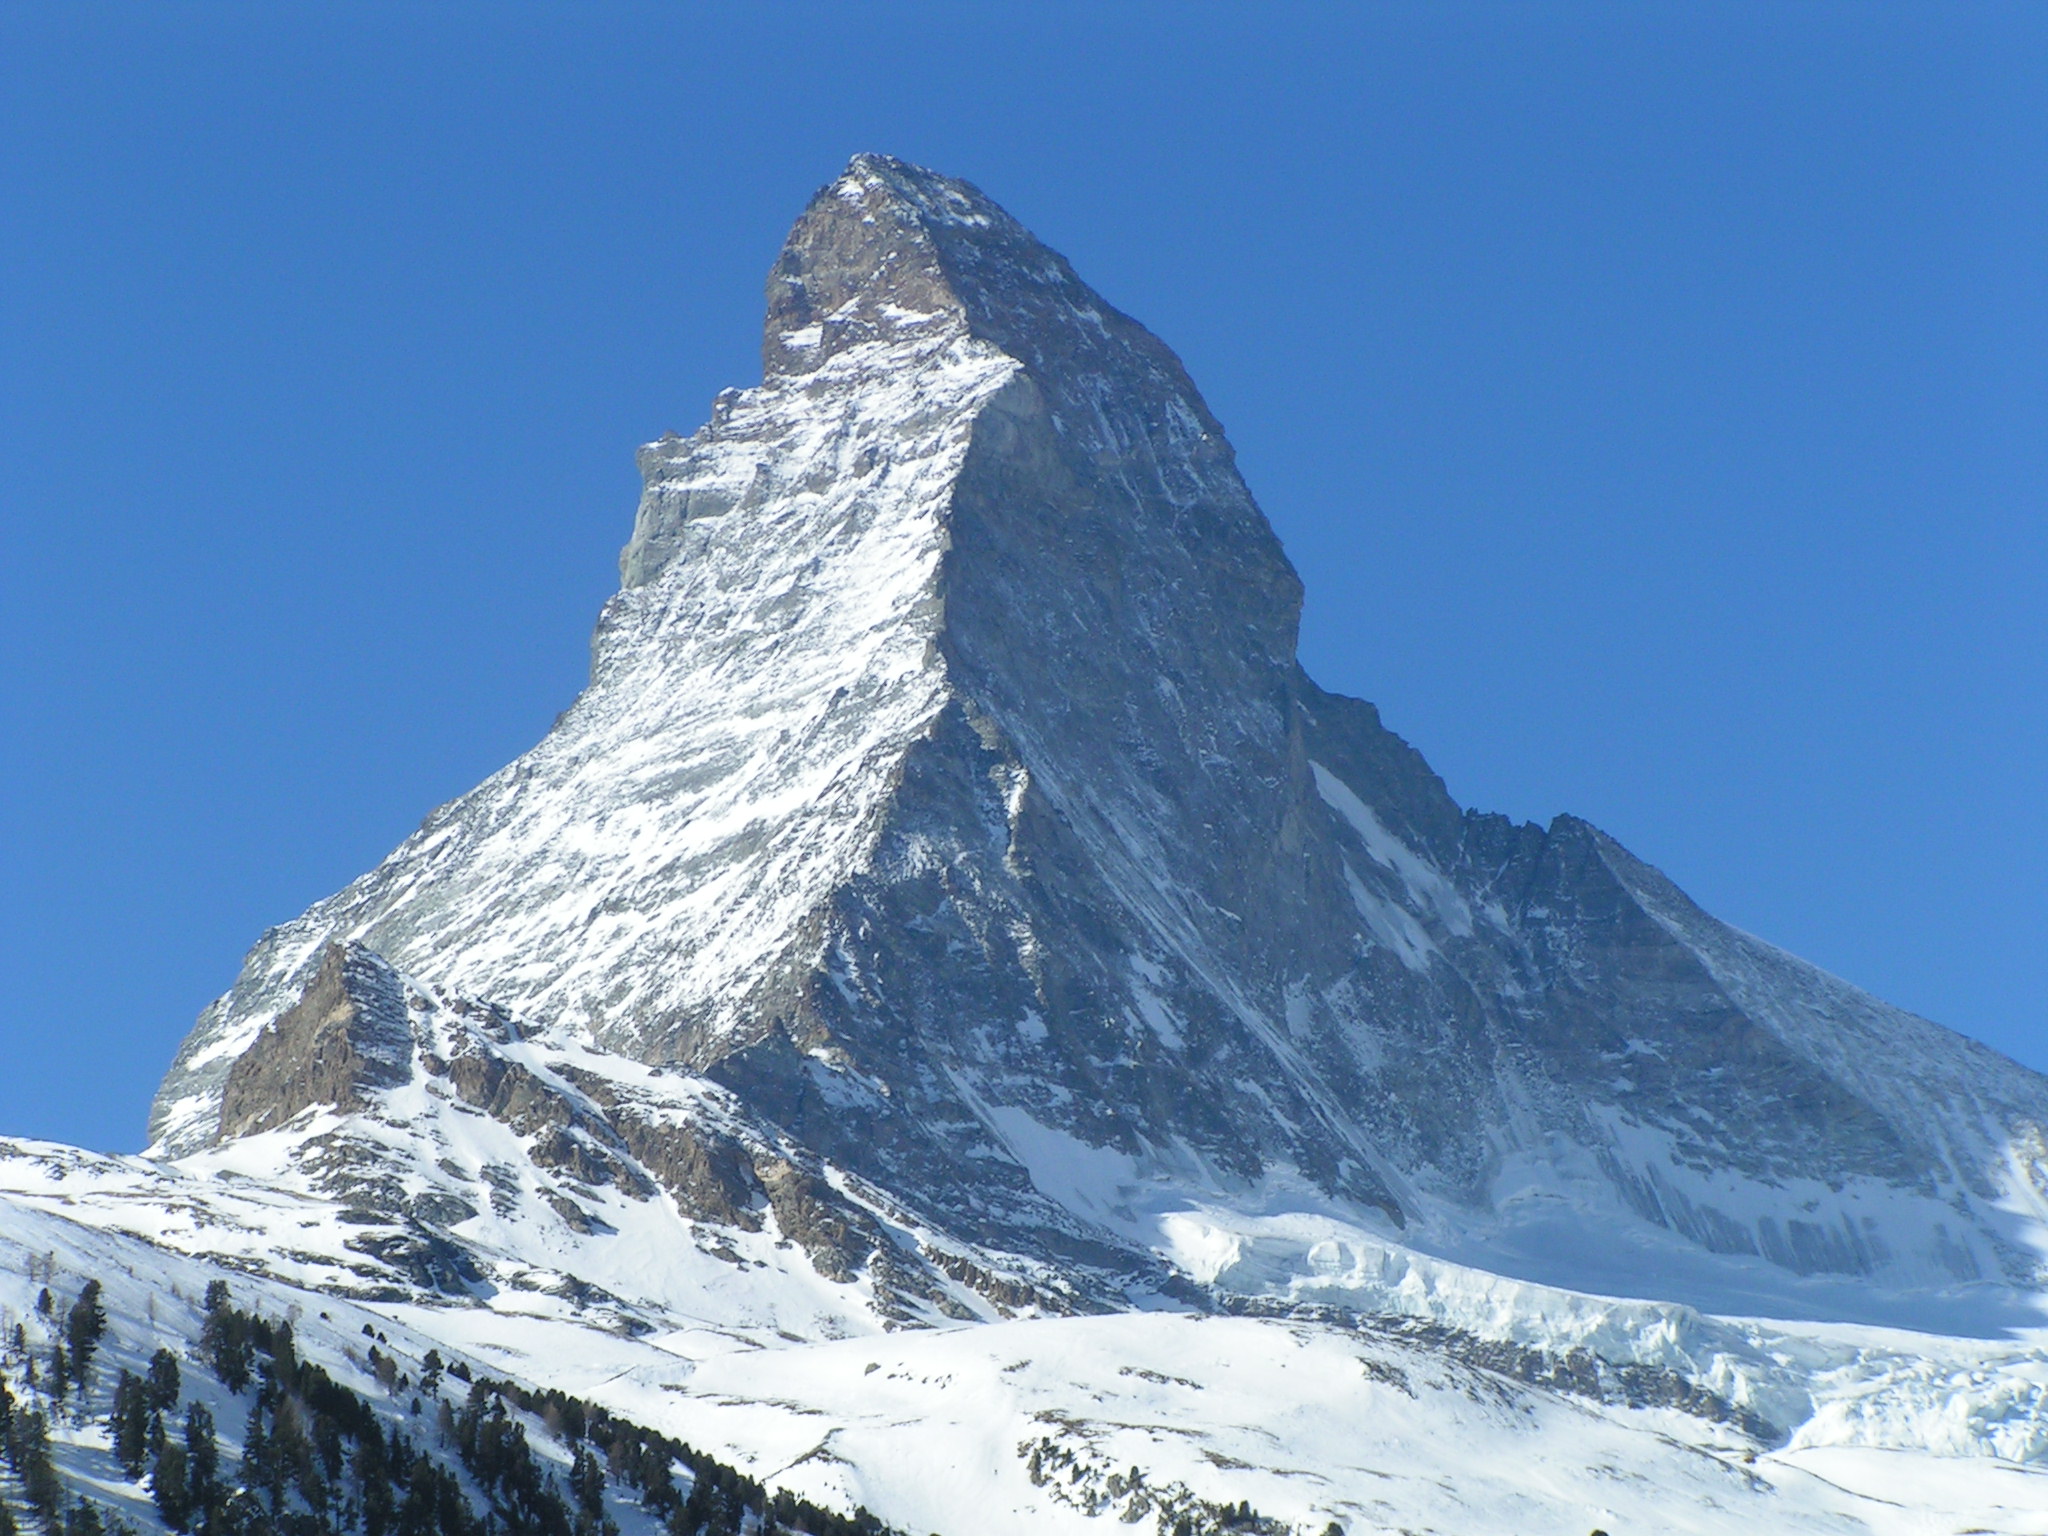 http://upload.wikimedia.org/wikipedia/commons/2/26/Matterhorn-EastAndNorthside-viewedFromZermatt_landscapeformat.jpg